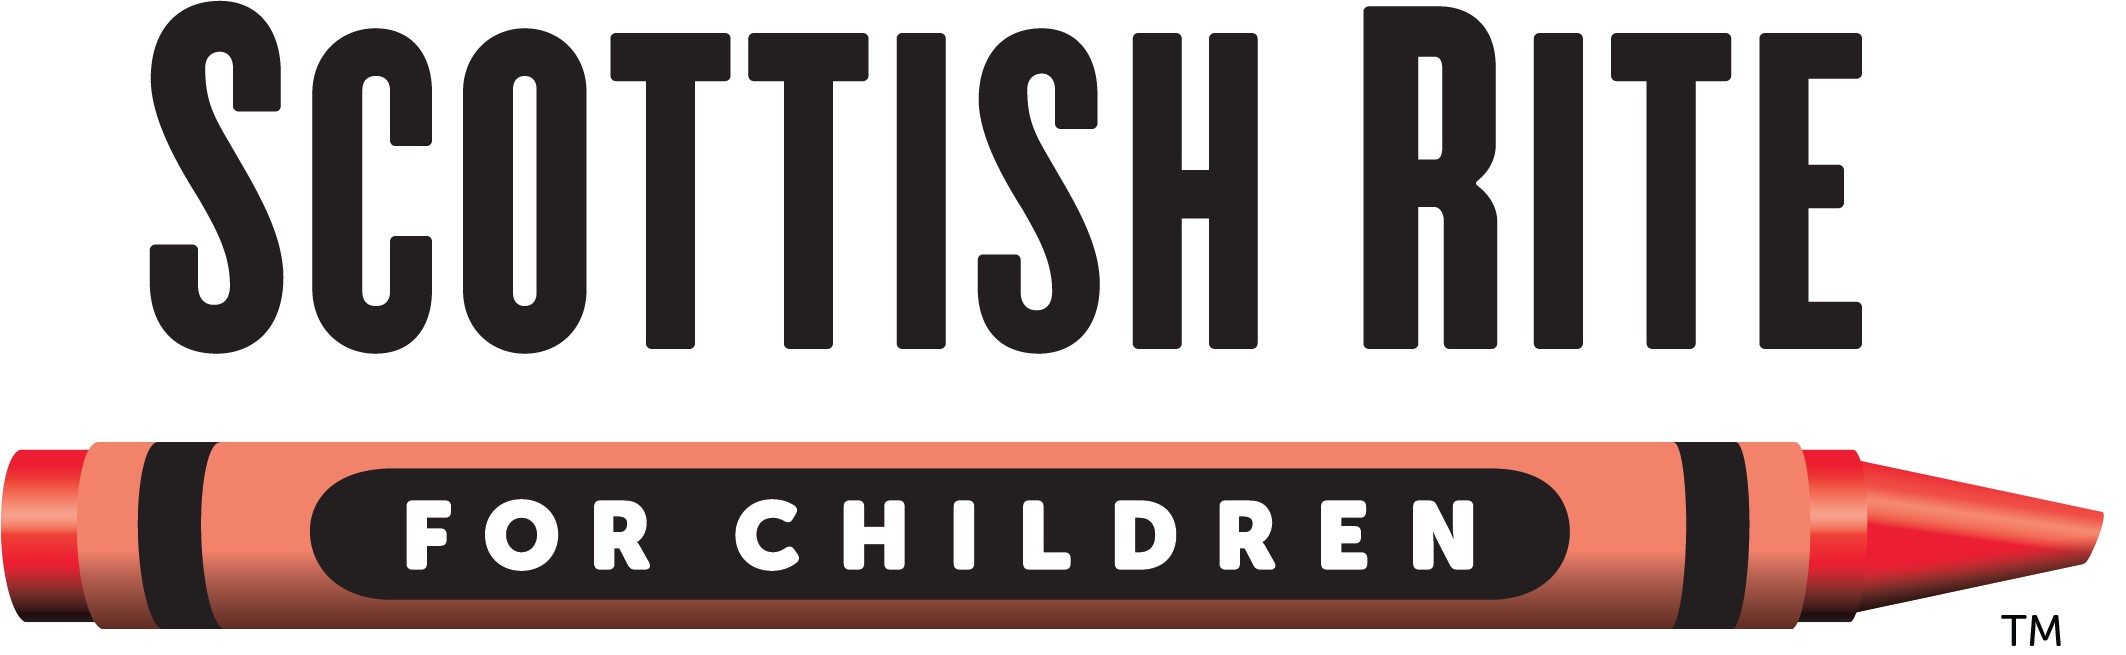 Scottish Rite for Children 